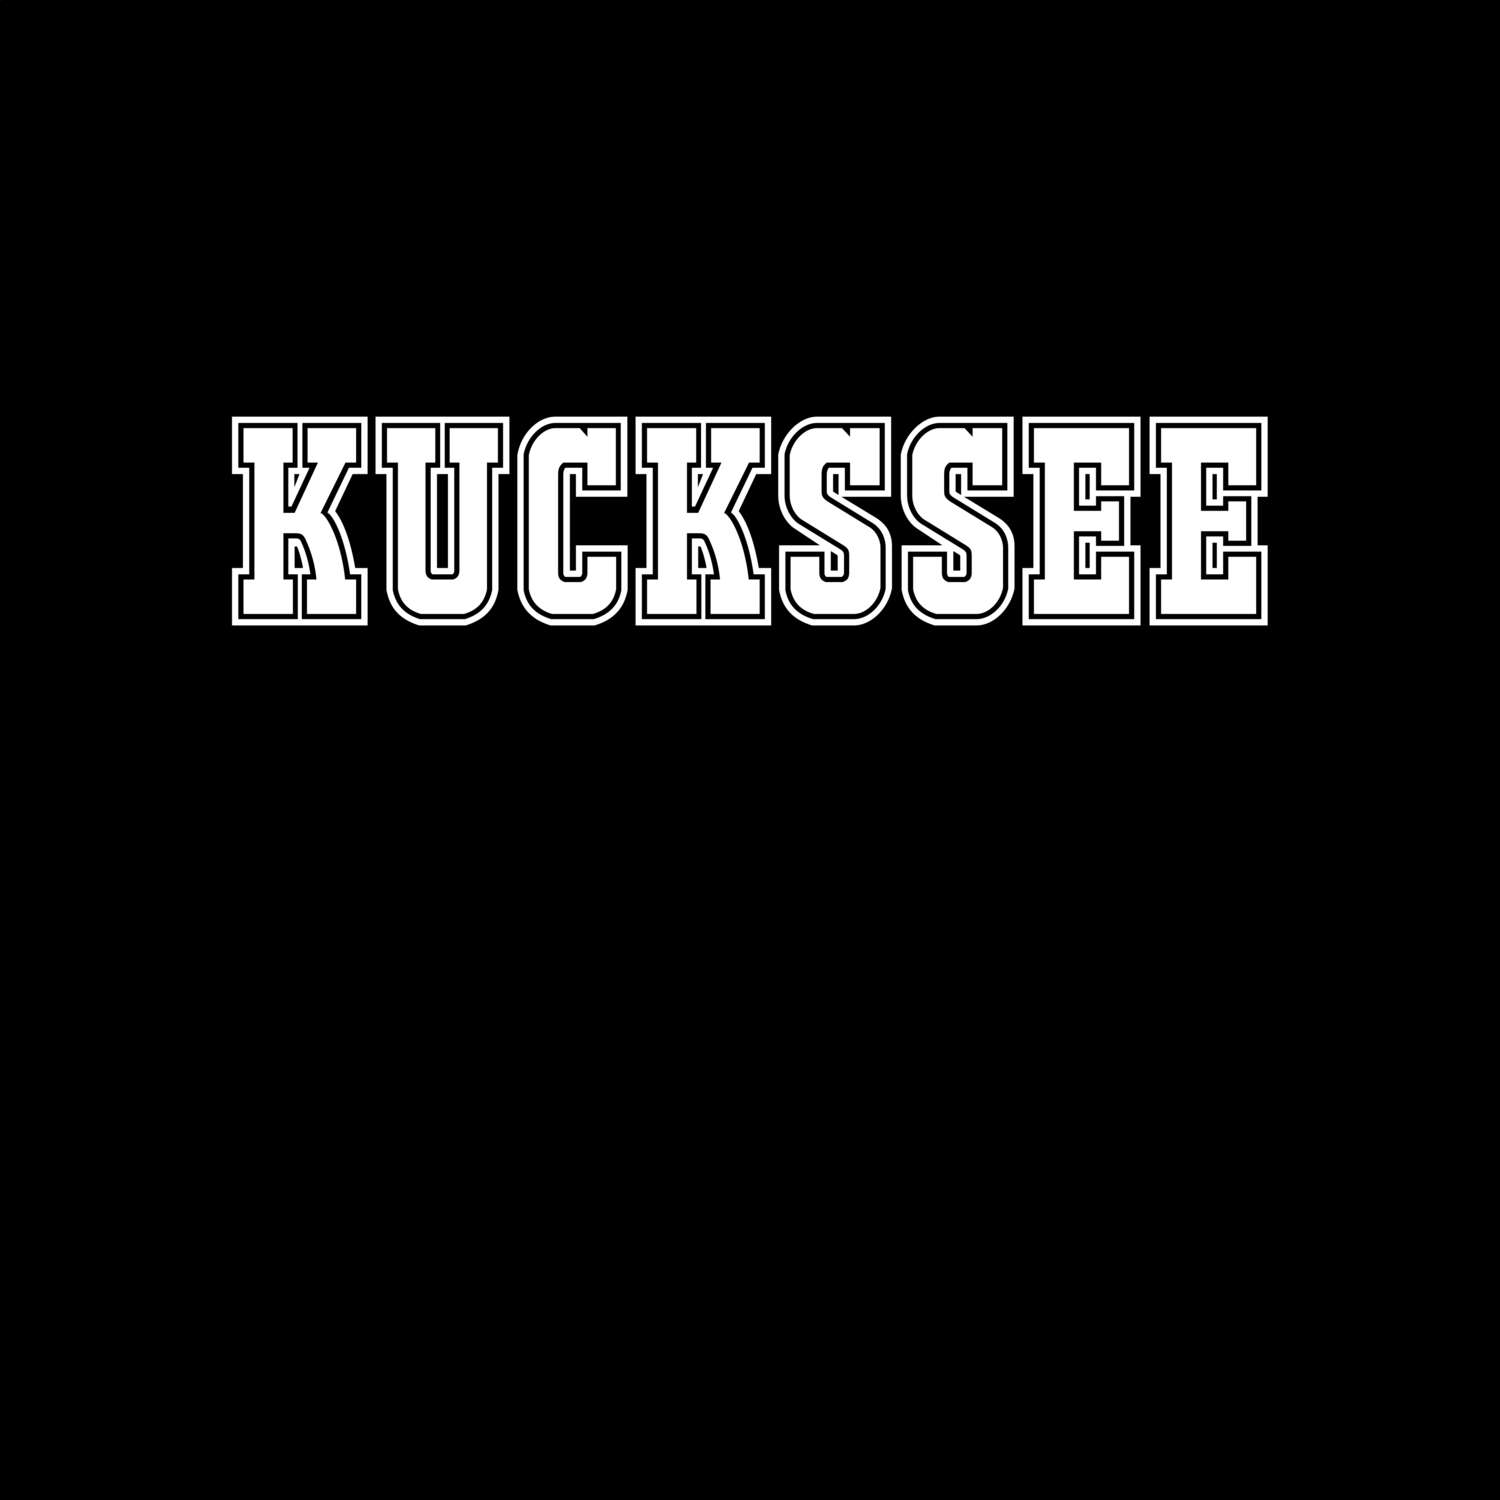 Kuckssee T-Shirt »Classic«